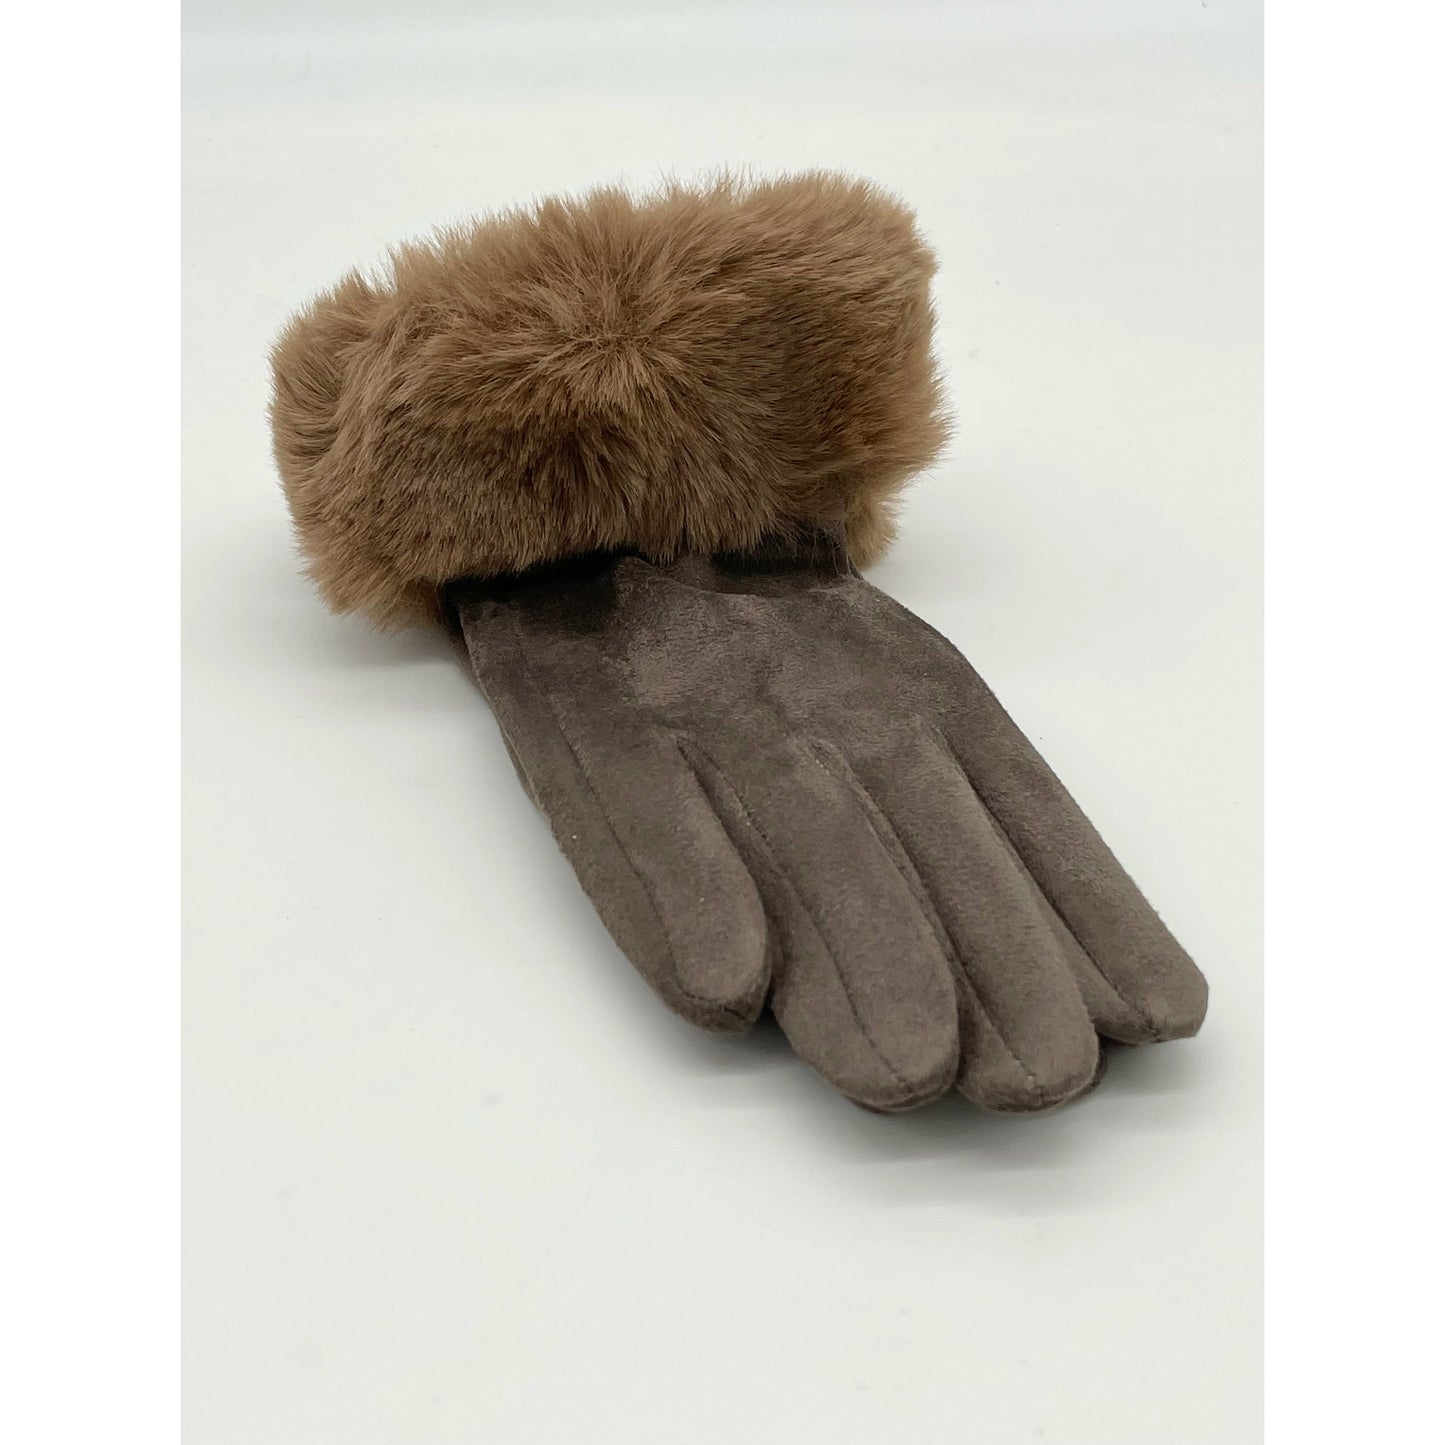 Khaki brown fur gloves